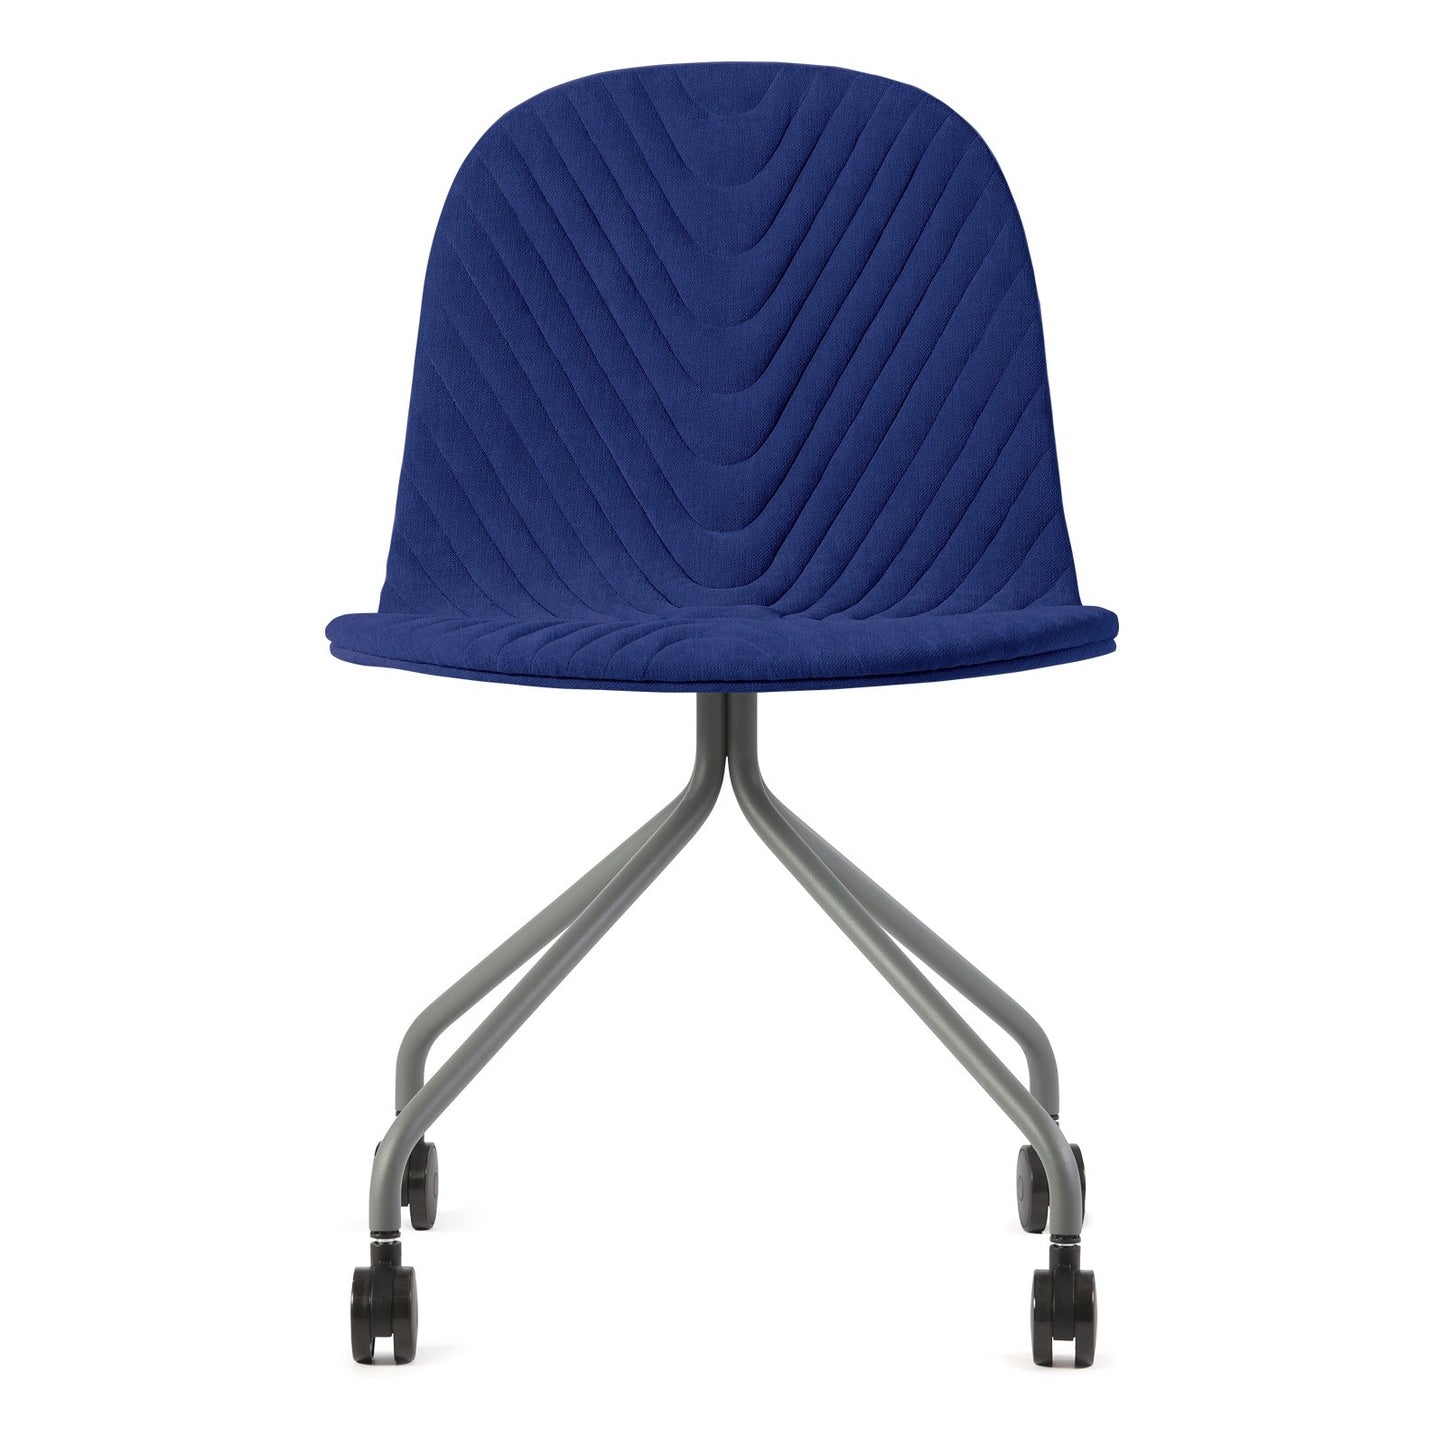 Chair Mannequin 04 - Navy Blue